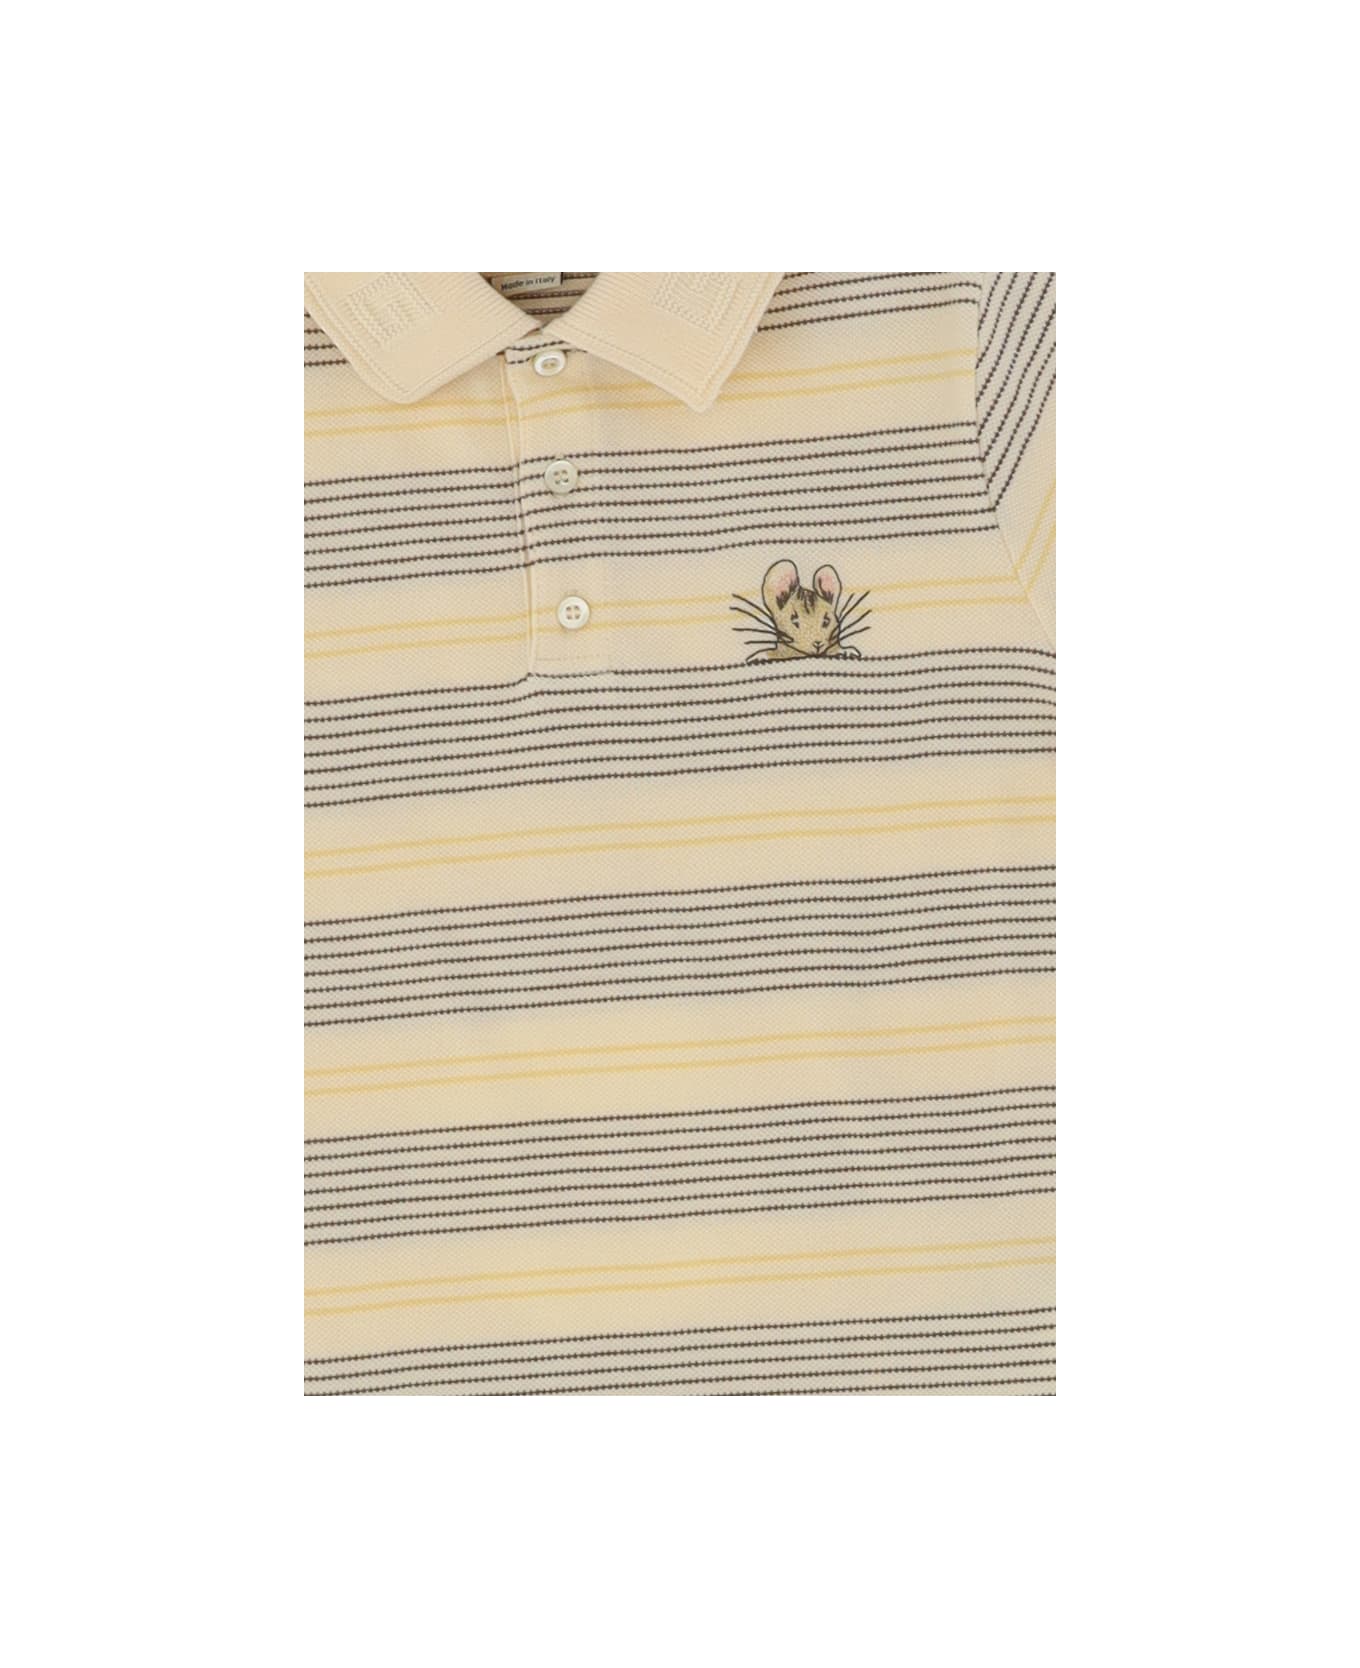 Gucci Polo usb Shirt For Boy - Yellow/brown